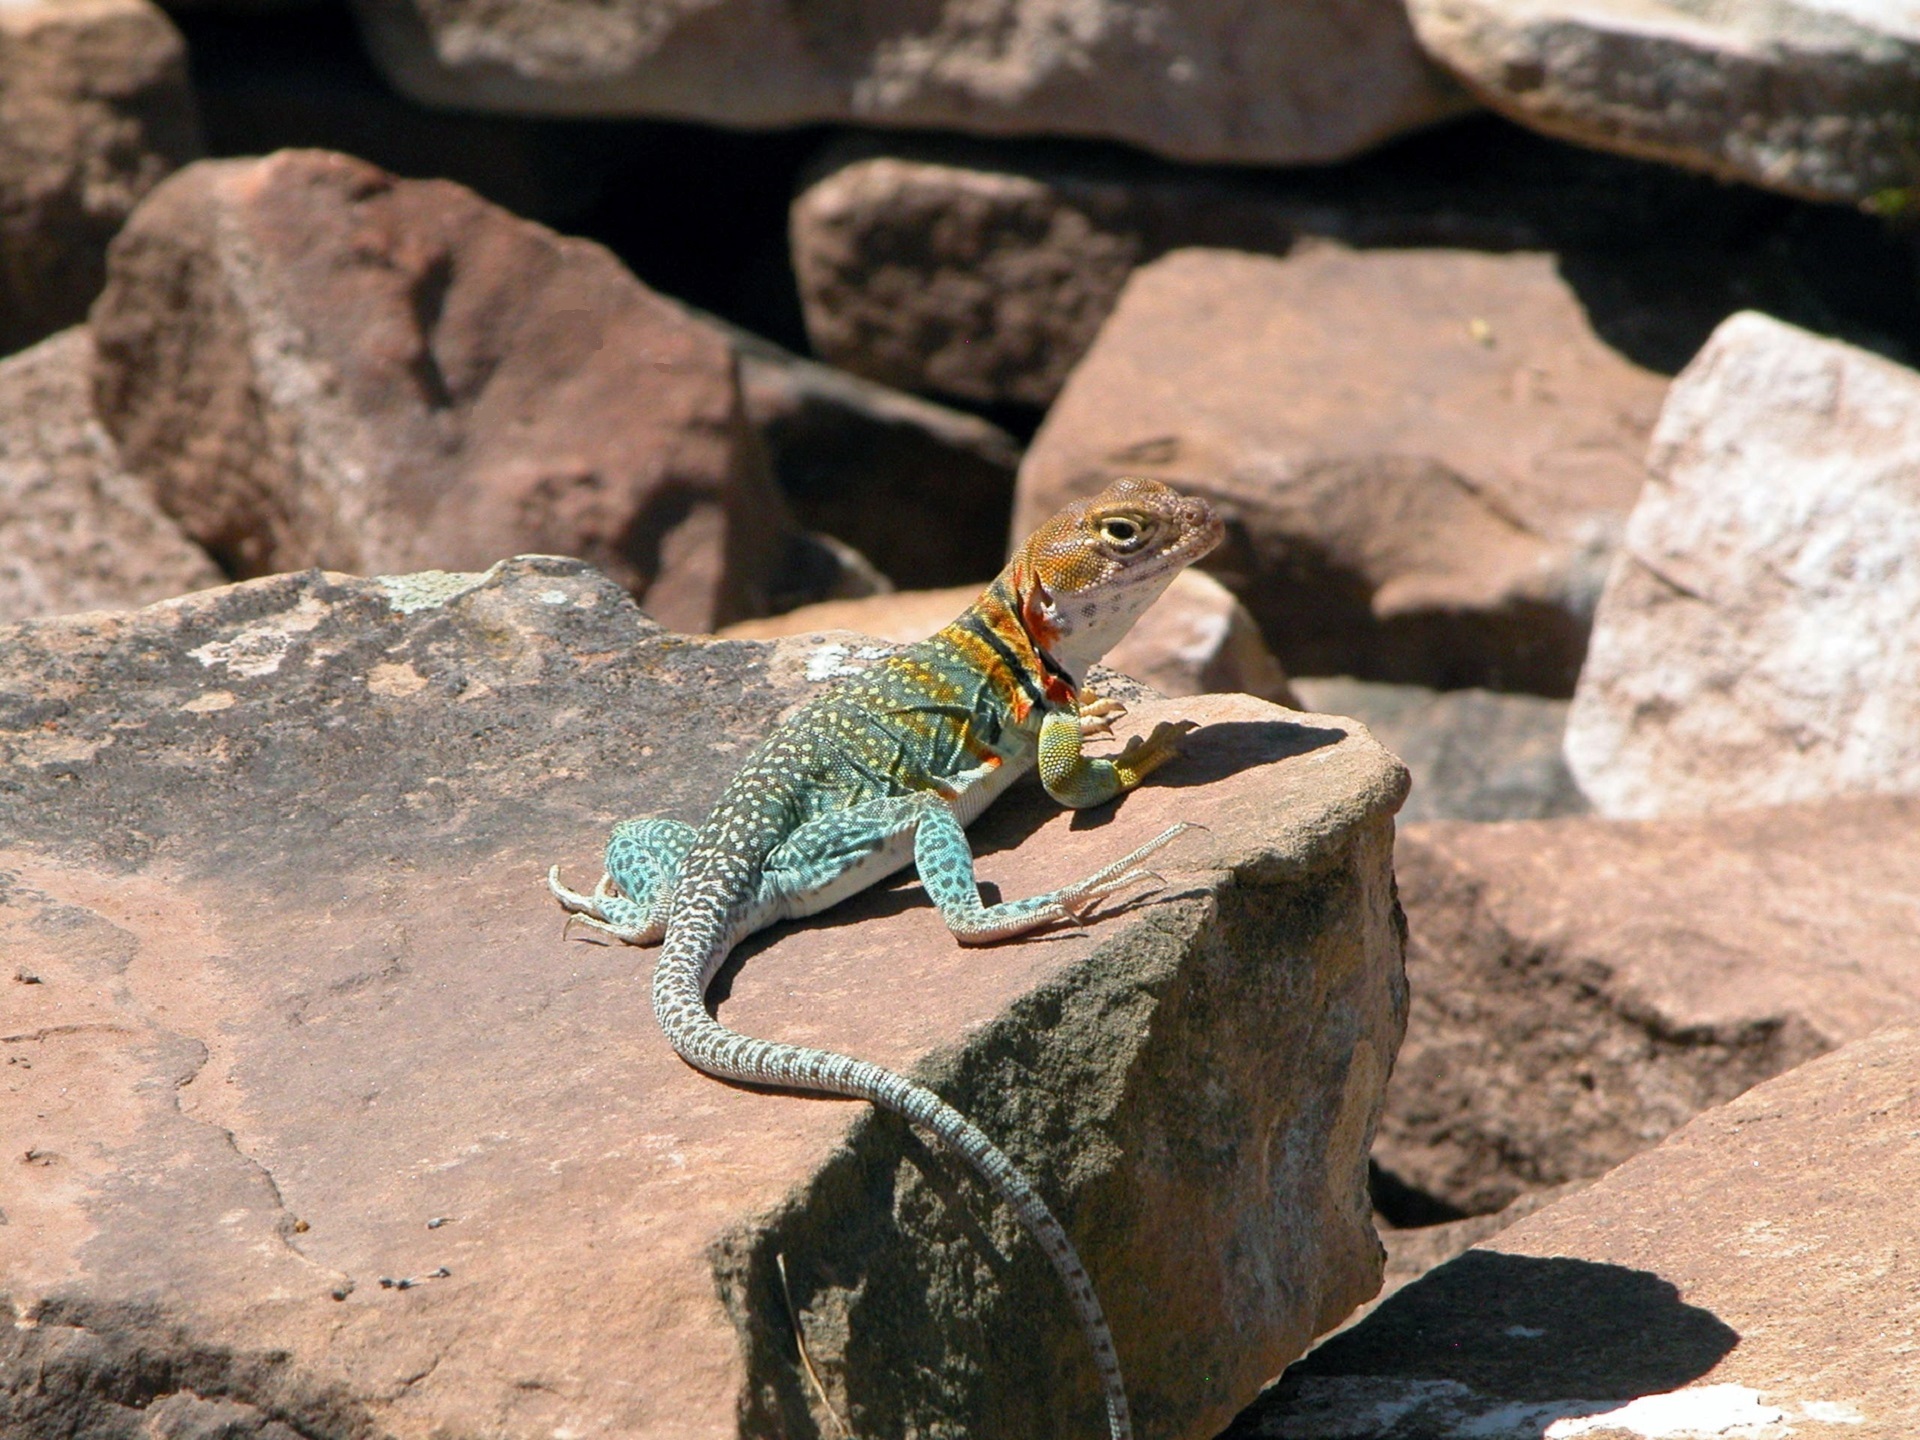 Lizard on the rock photo